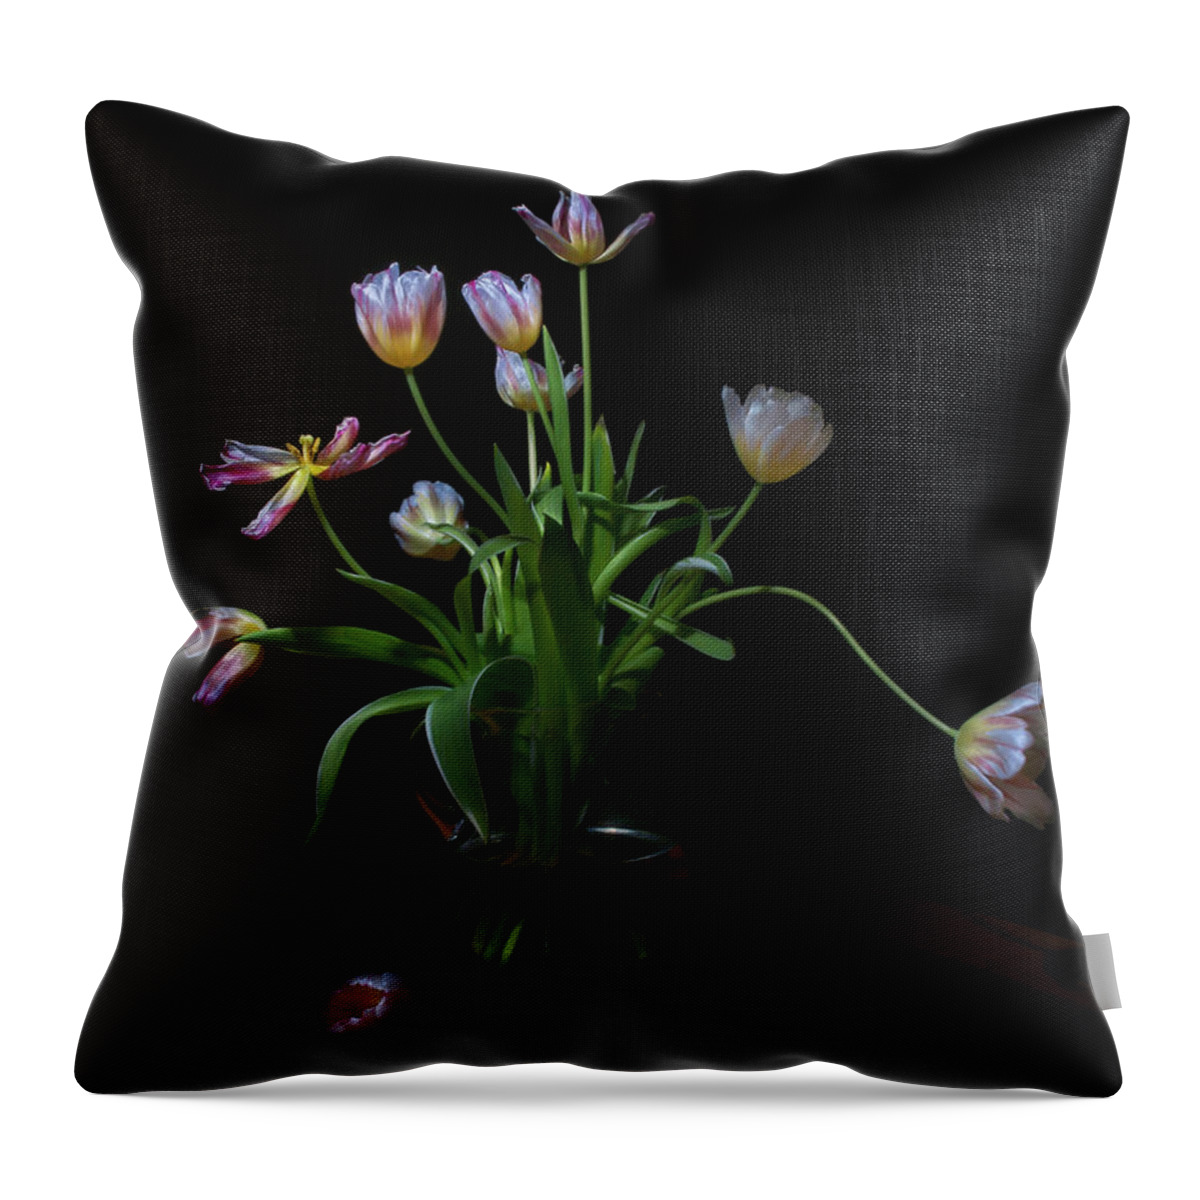 Vase Throw Pillow featuring the photograph Tulips by Karen Von Knobloch Photographerkaren